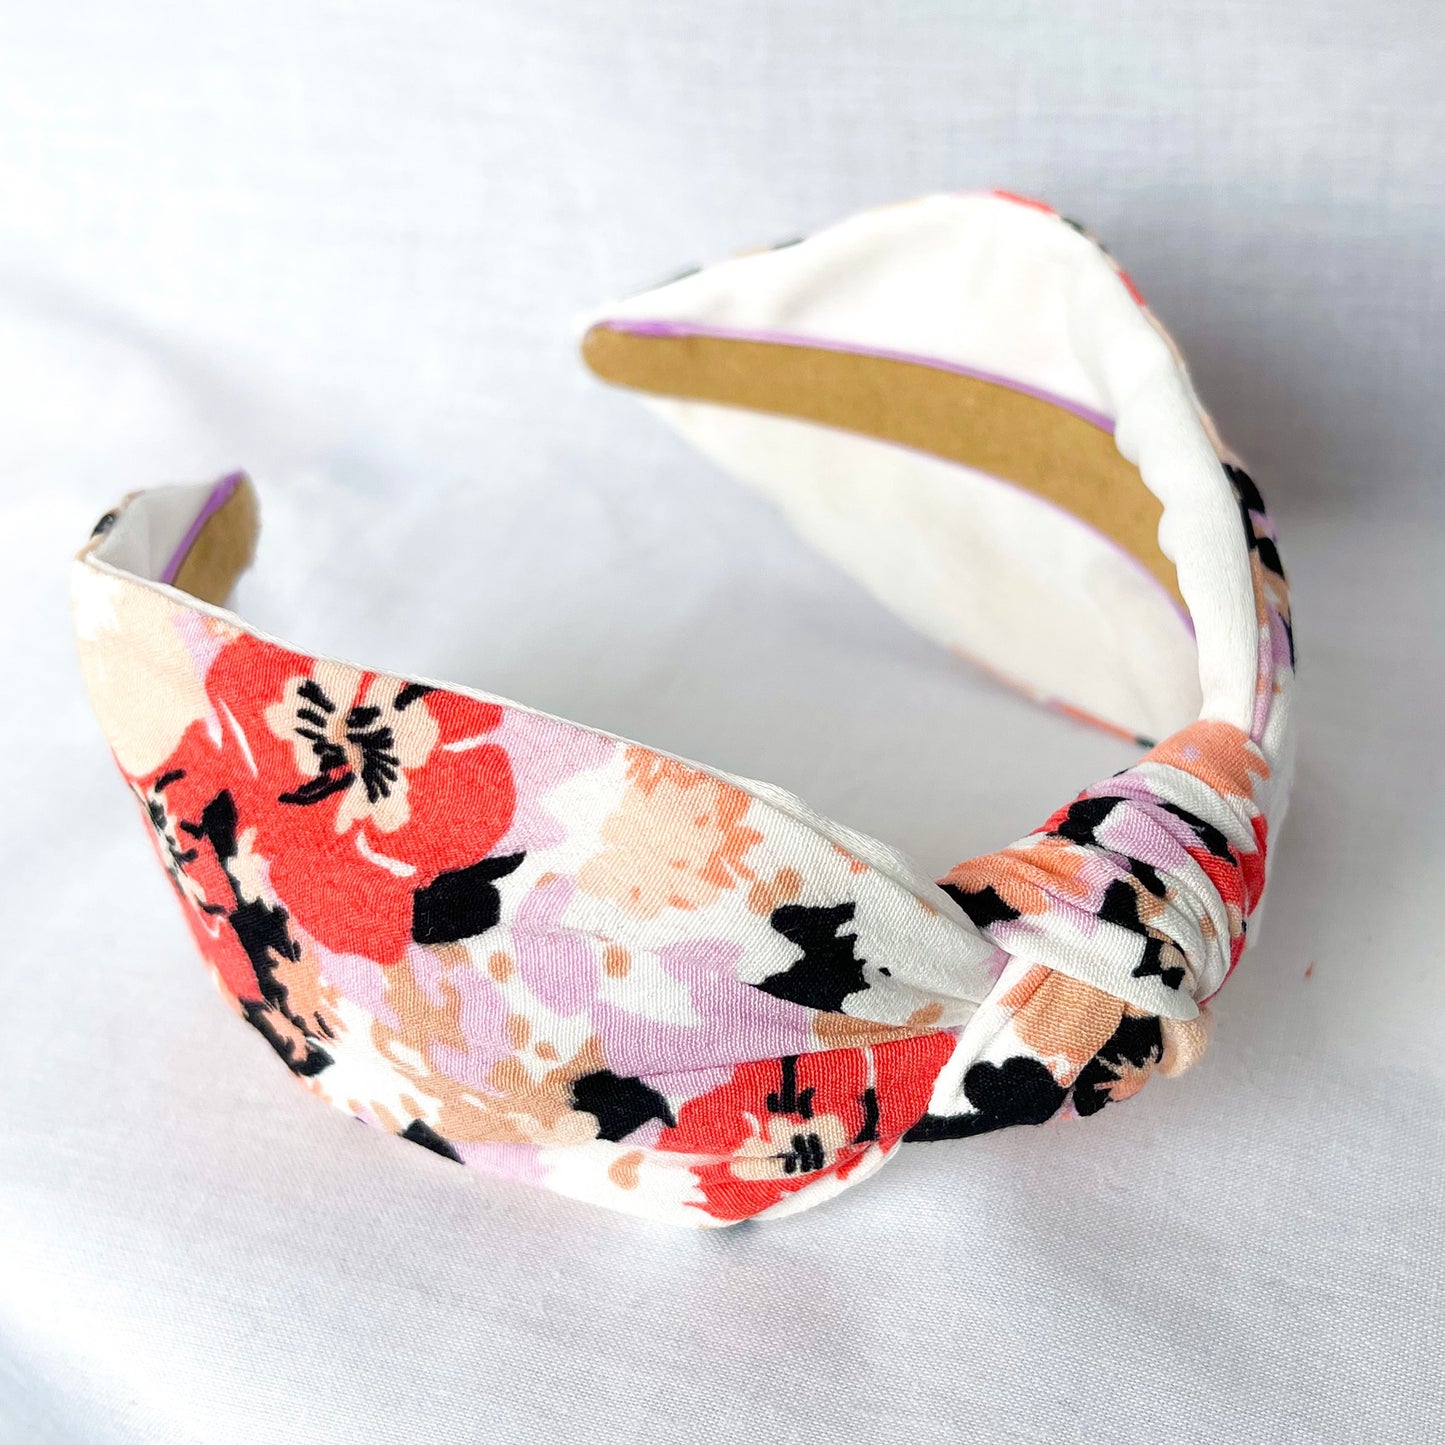 Satin lined floral headband, silk top knot headband, curly hair accessory